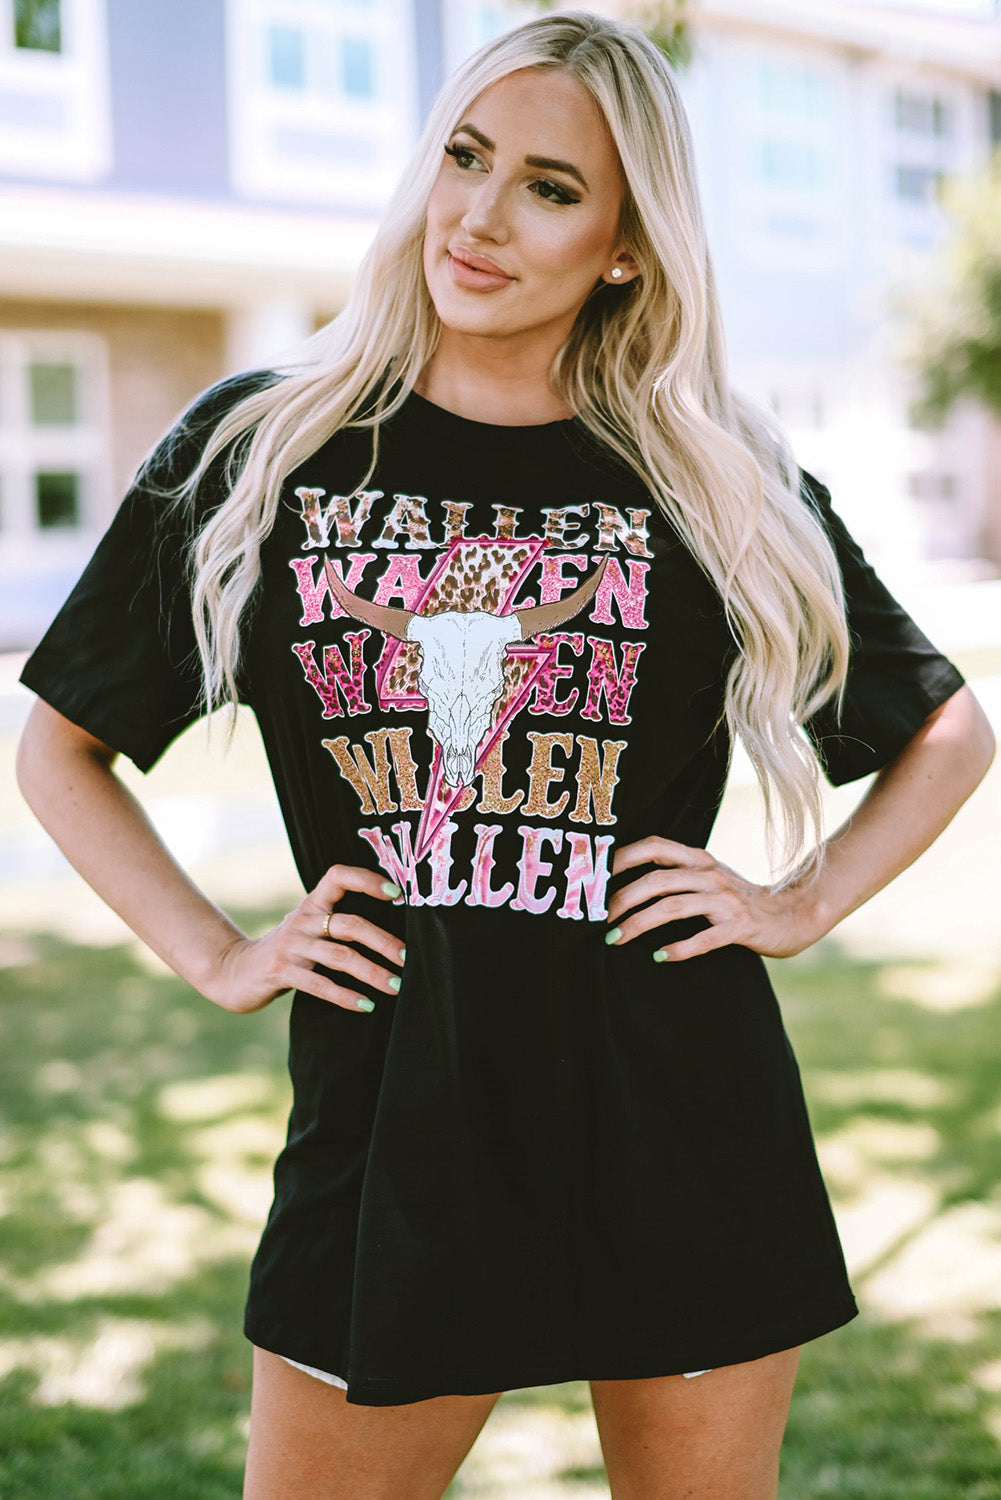 T-shirt oversize con grafica Cowskull nera WALLEN